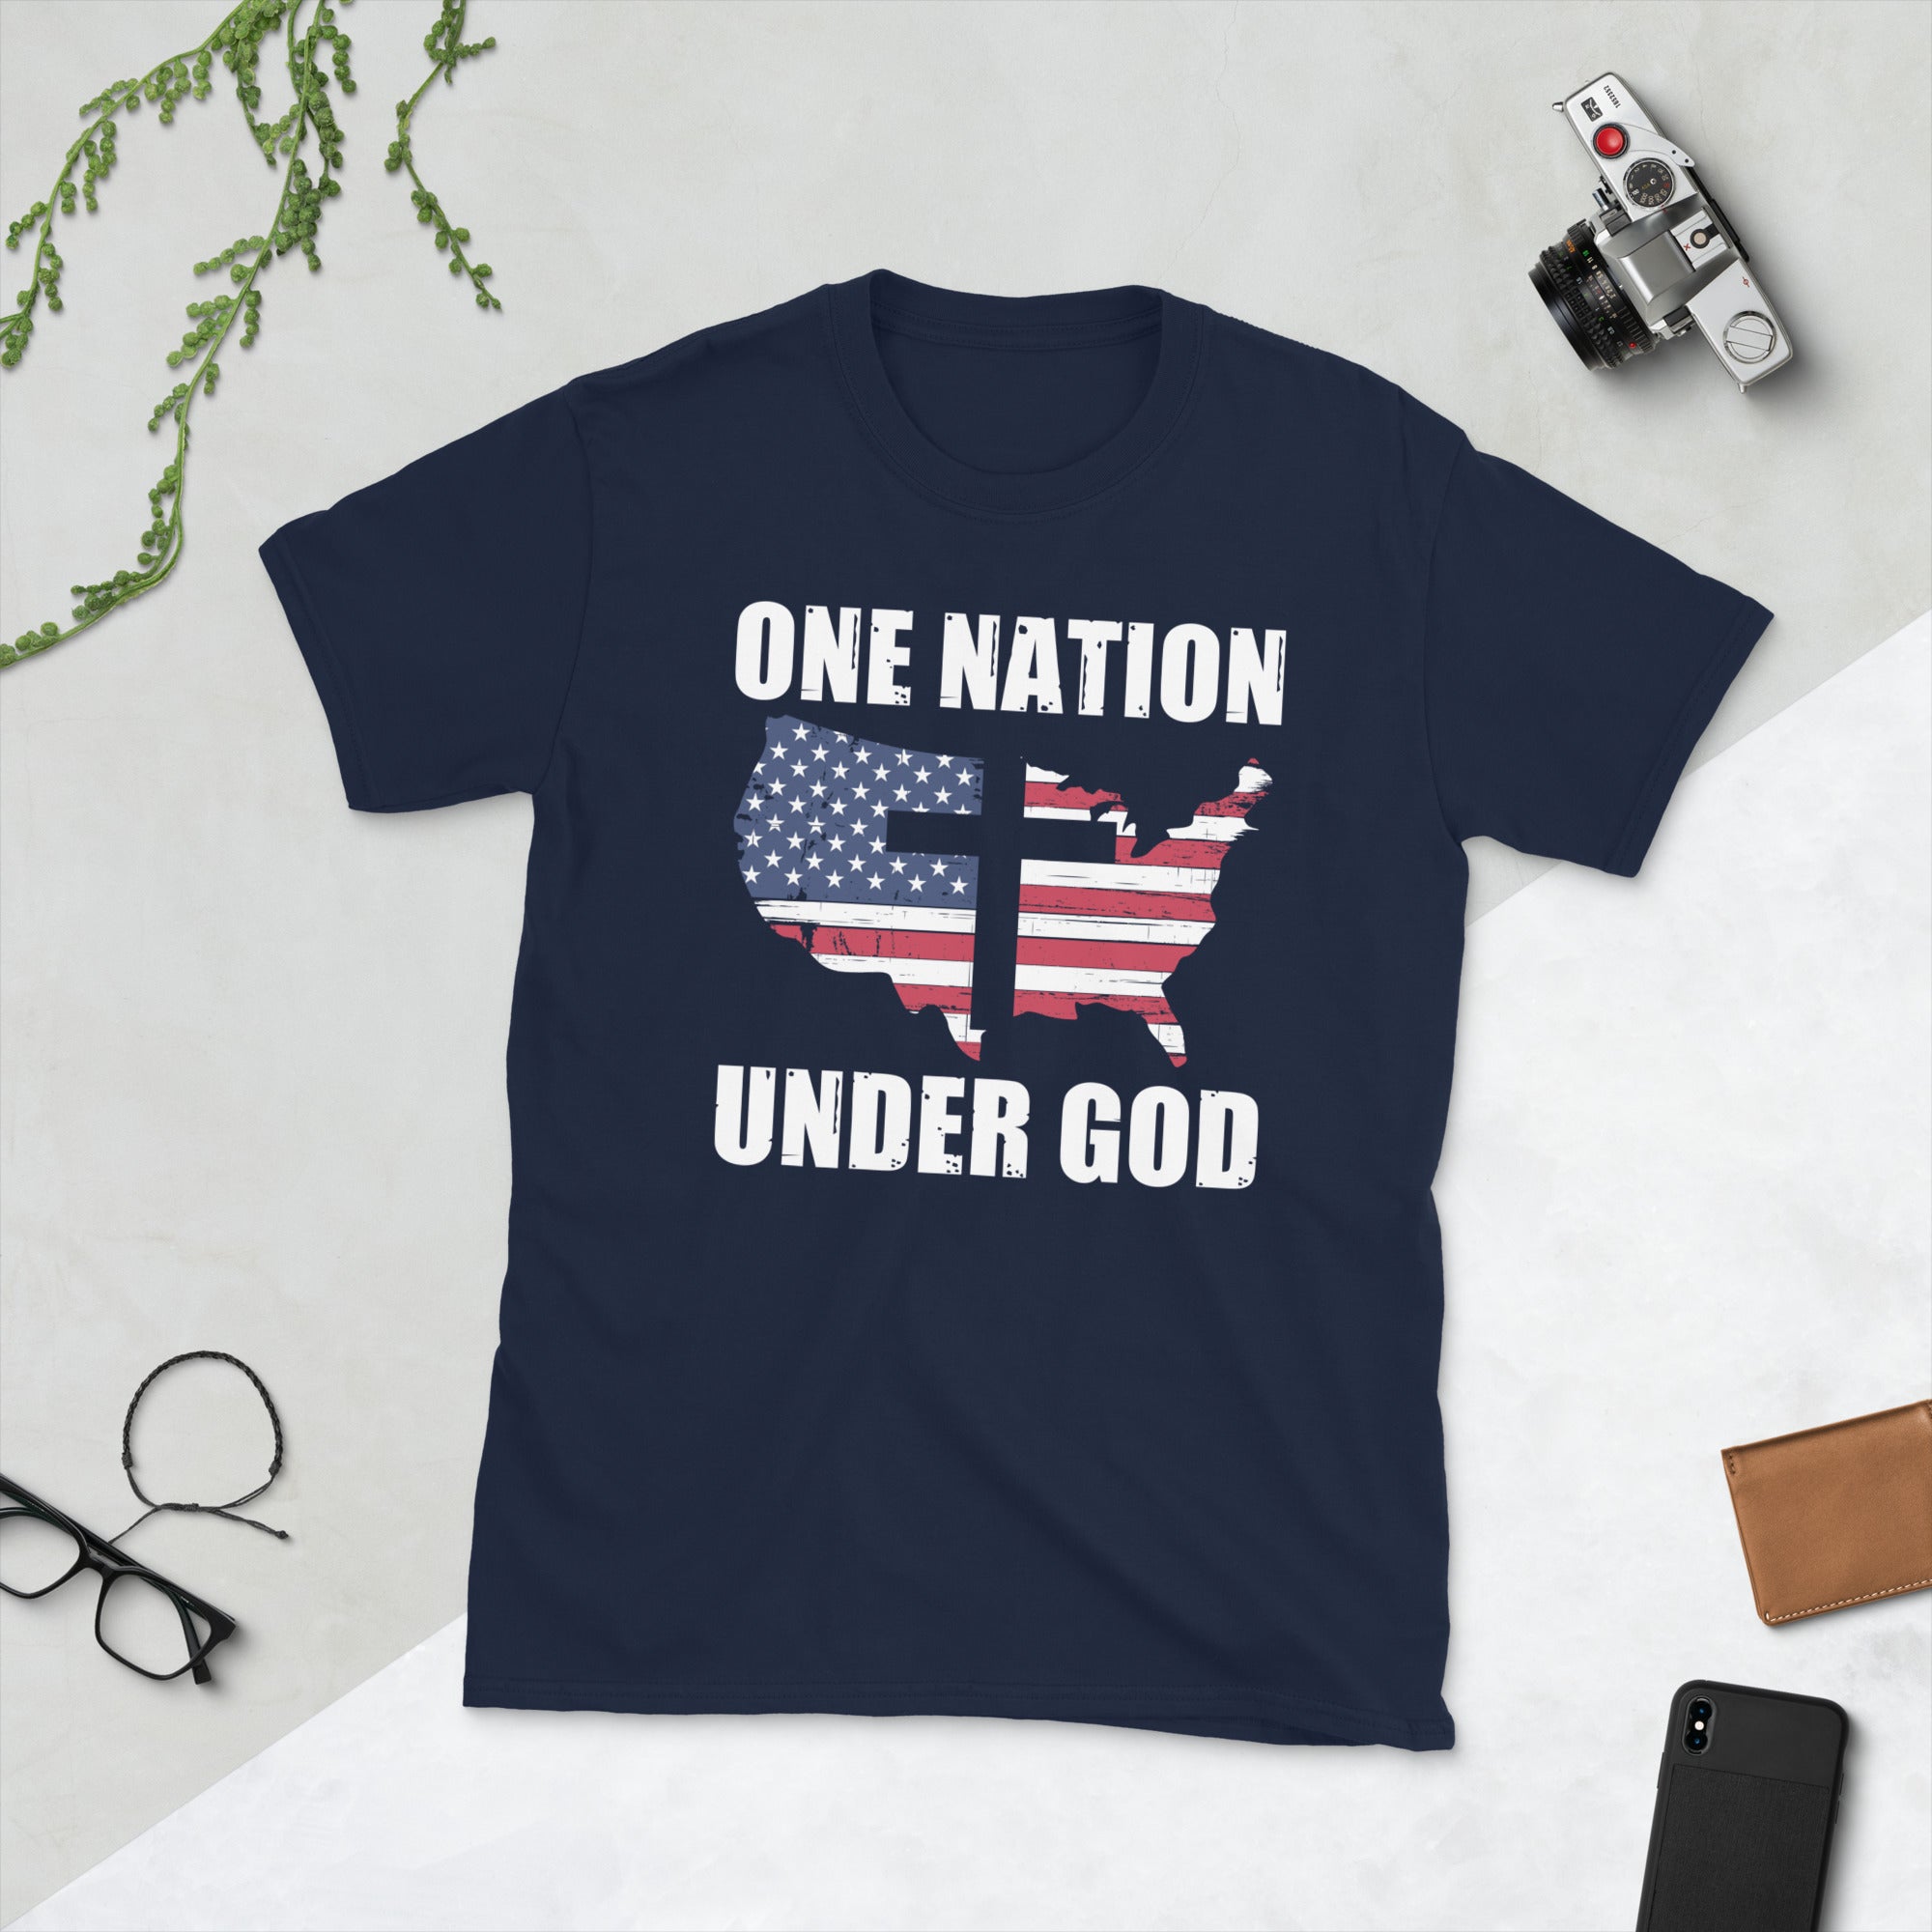 One Nation Under God Shirt, American Pride, Patriotic Gift, Freedom Shirt, USA Flag T Shirt, Pledge of Allegiance, Patriot Shirt, USA Cross